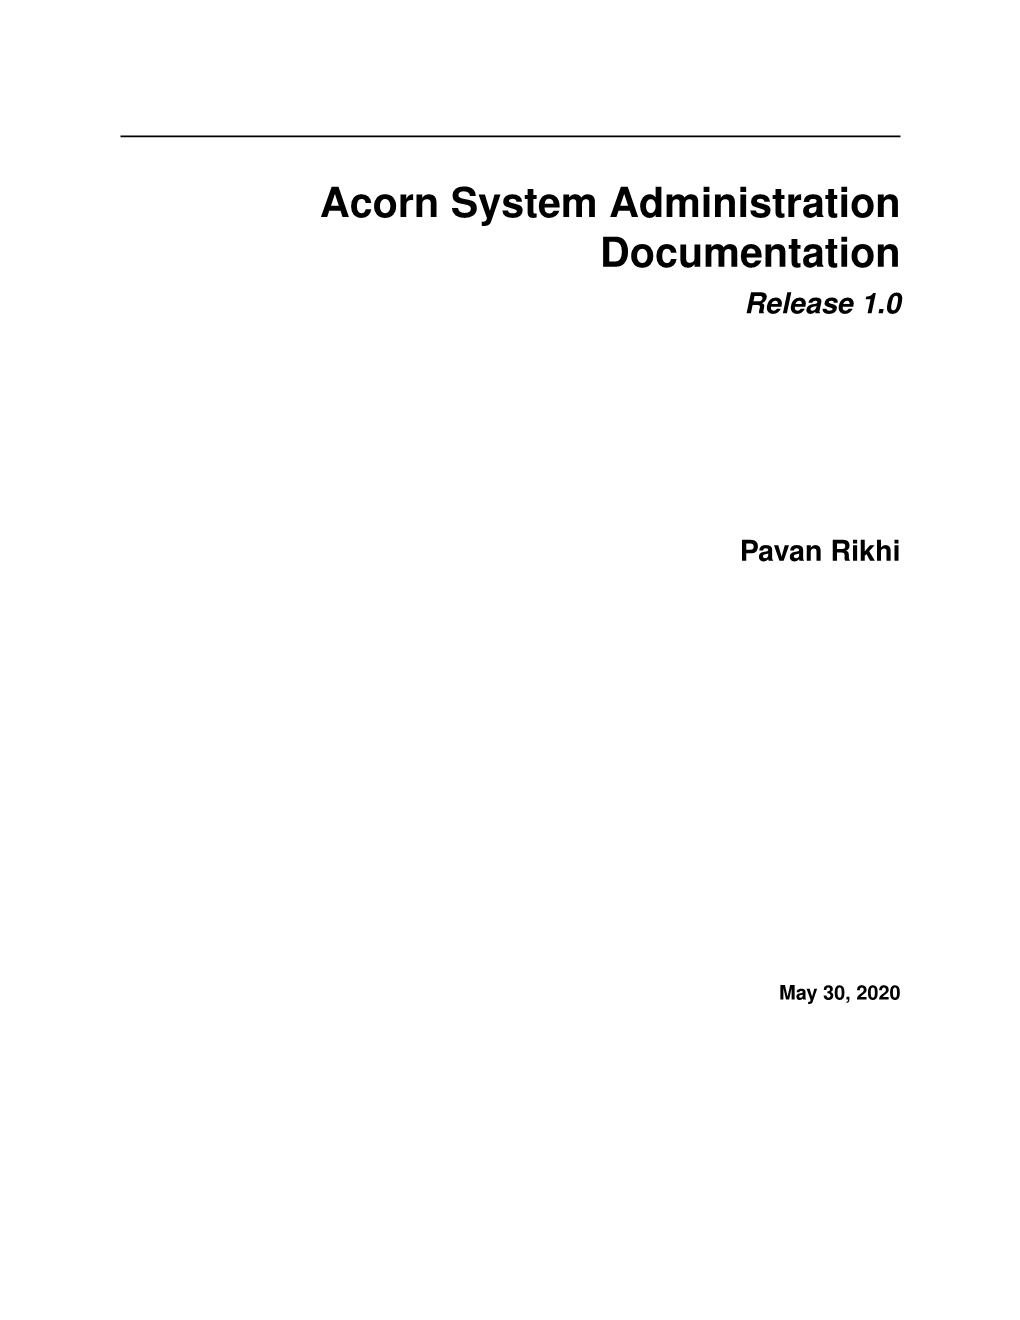 Acorn System Administration Documentation Release 1.0